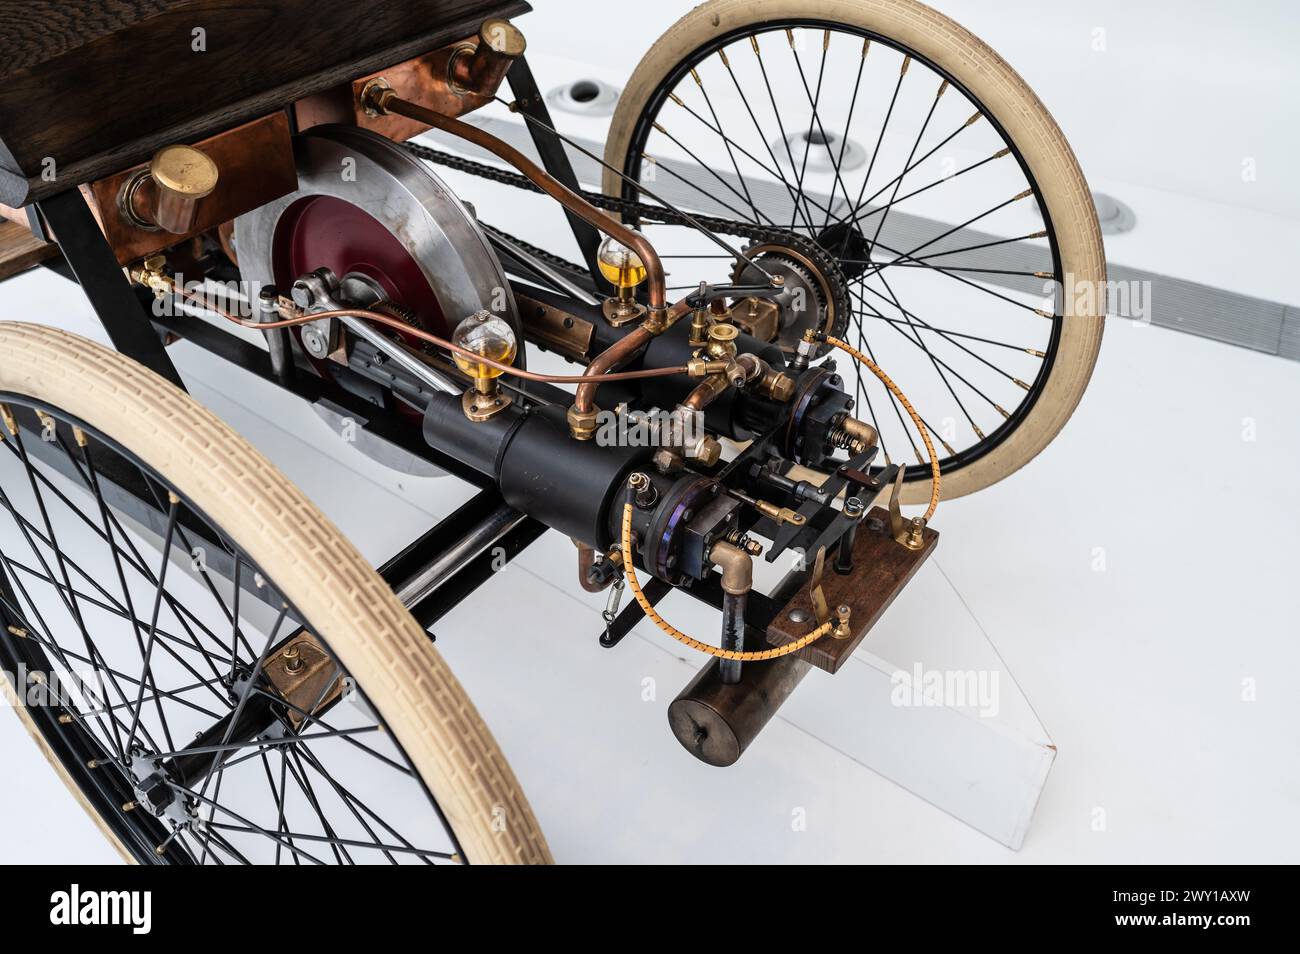 Ford Quadricycle from 1896.    Mobility City Technology Museum in Zaha Hadid’s Bridge (Bridge Pavilion), Zaragoza, Spain Stock Photo